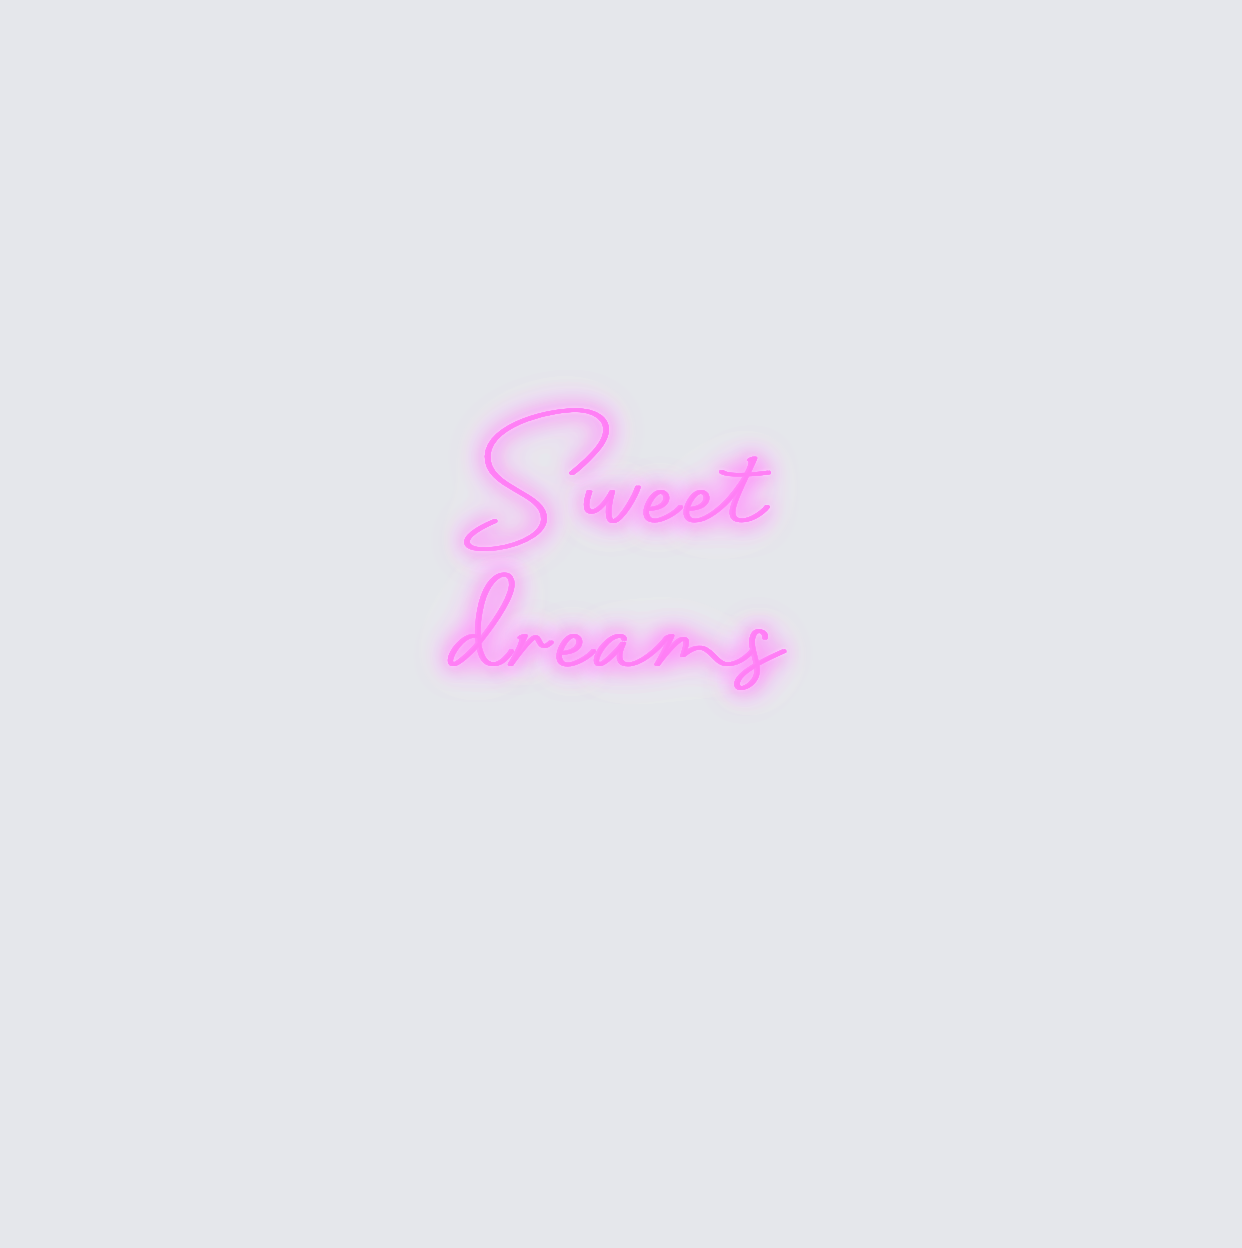 Custom neon sign - Sweet dreams